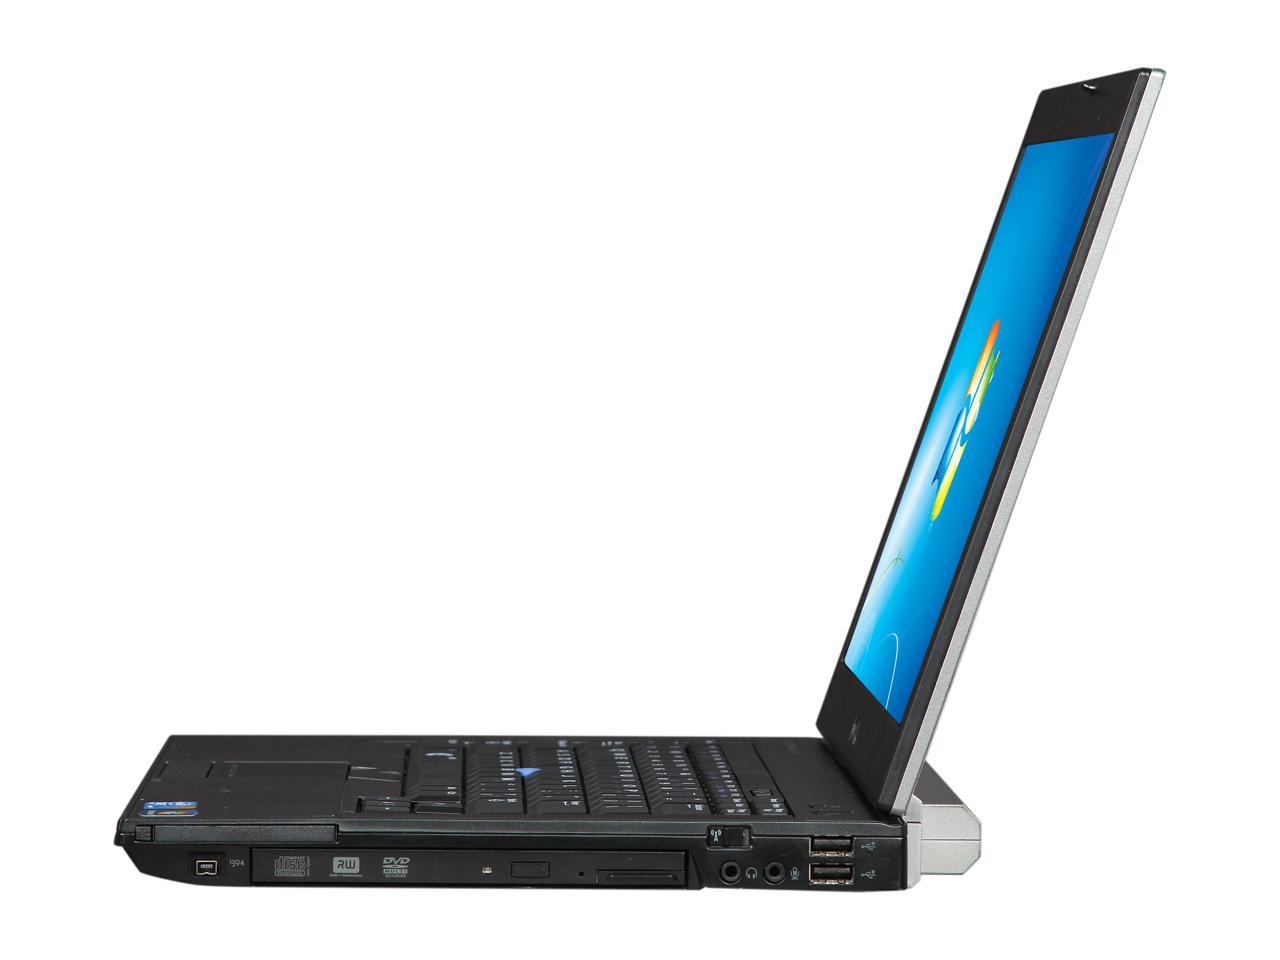 Dell Latitude E6410 14.1" Notebook with Intel Core i5-520M 2.40Ghz, 4GB RAM, 160GB HDD, Windows 7 Home Premium 64-Bit